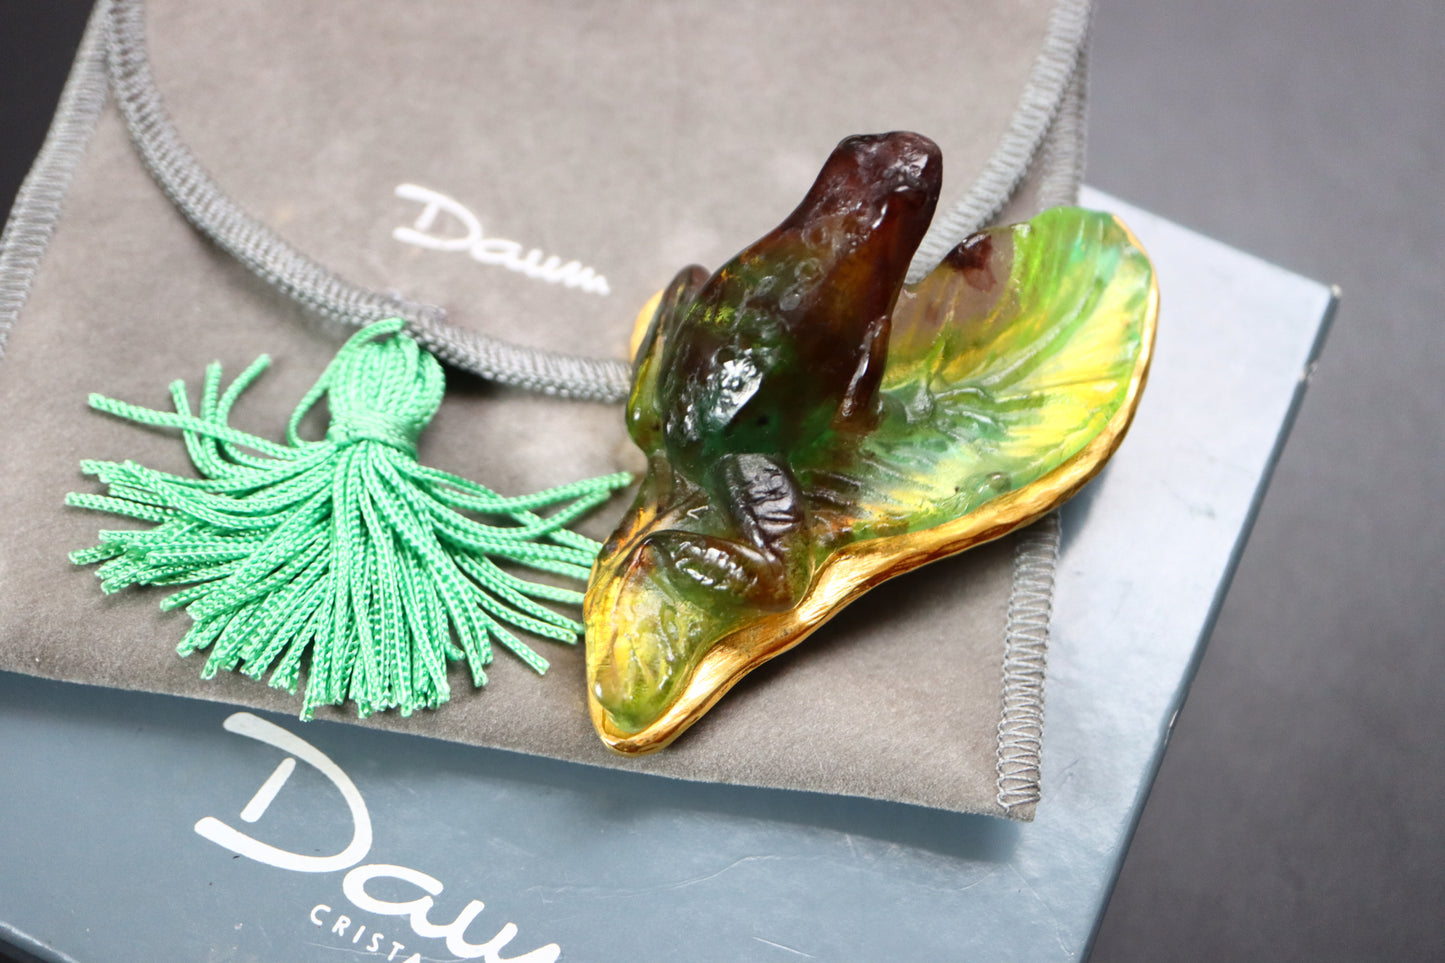 Daum France art crystal glass sculpt large frog tropical rainforest brooch